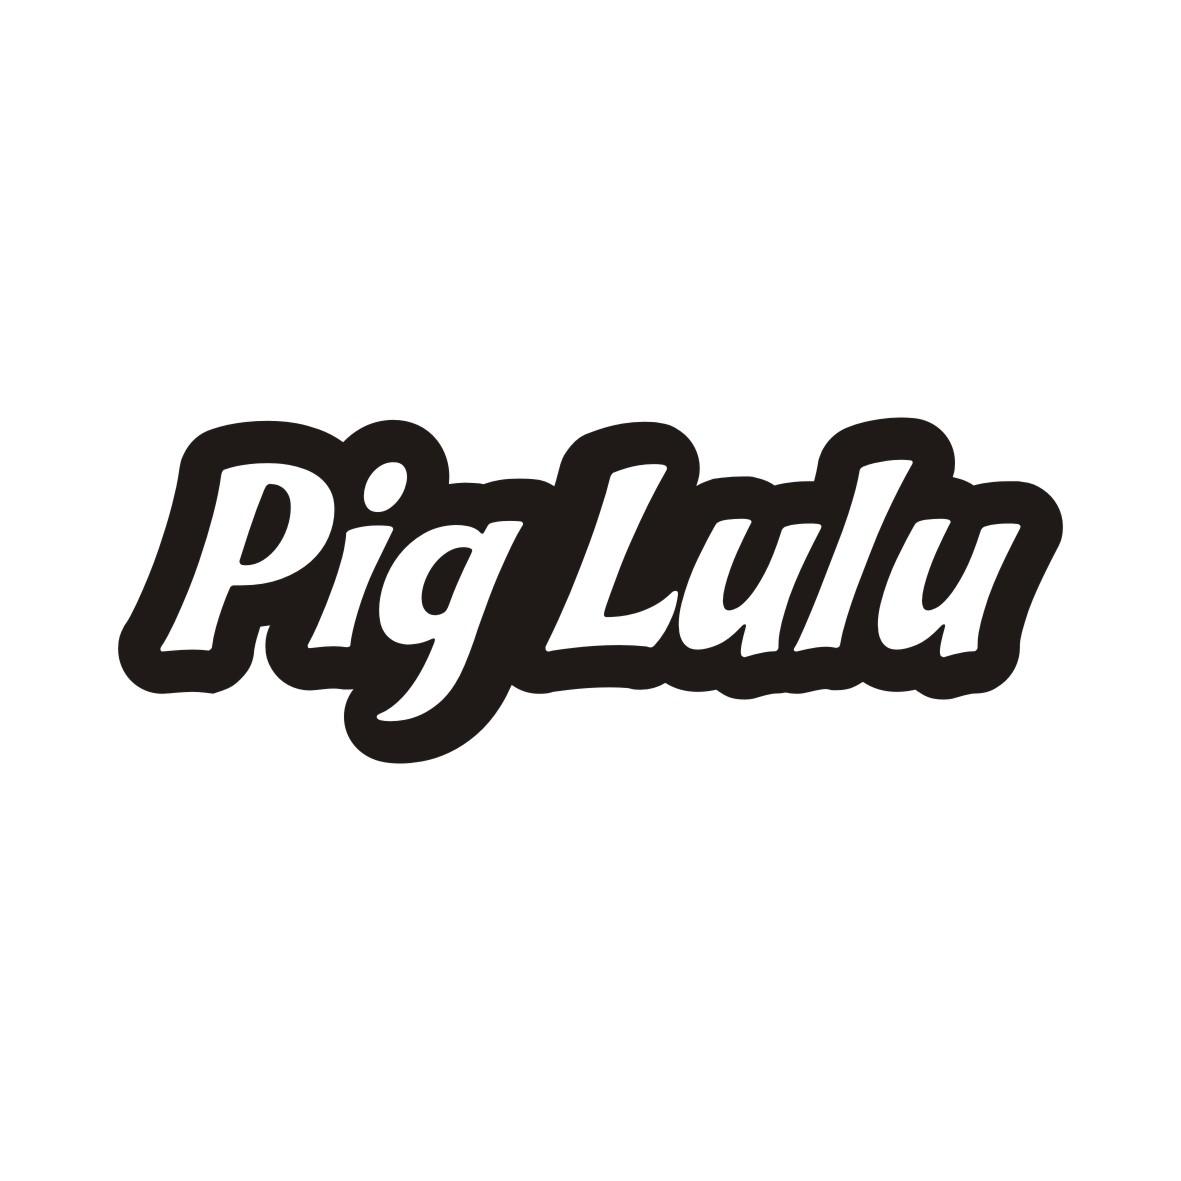 PIG LULU